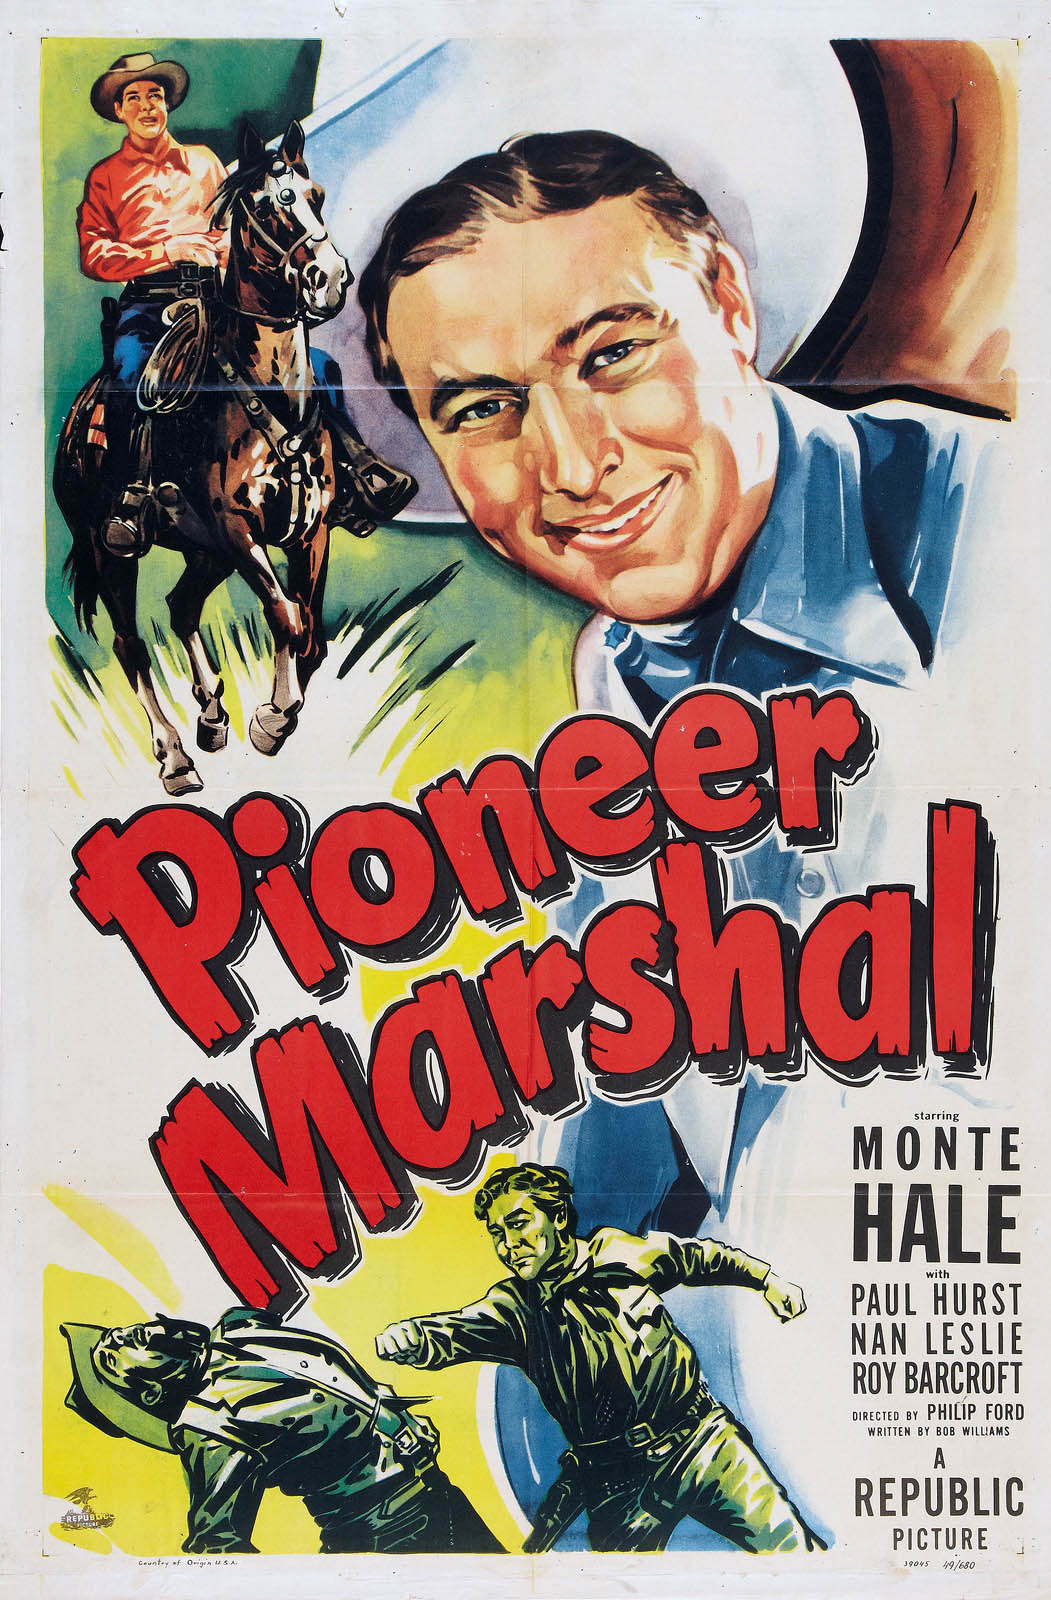 PIONEER MARSHAL